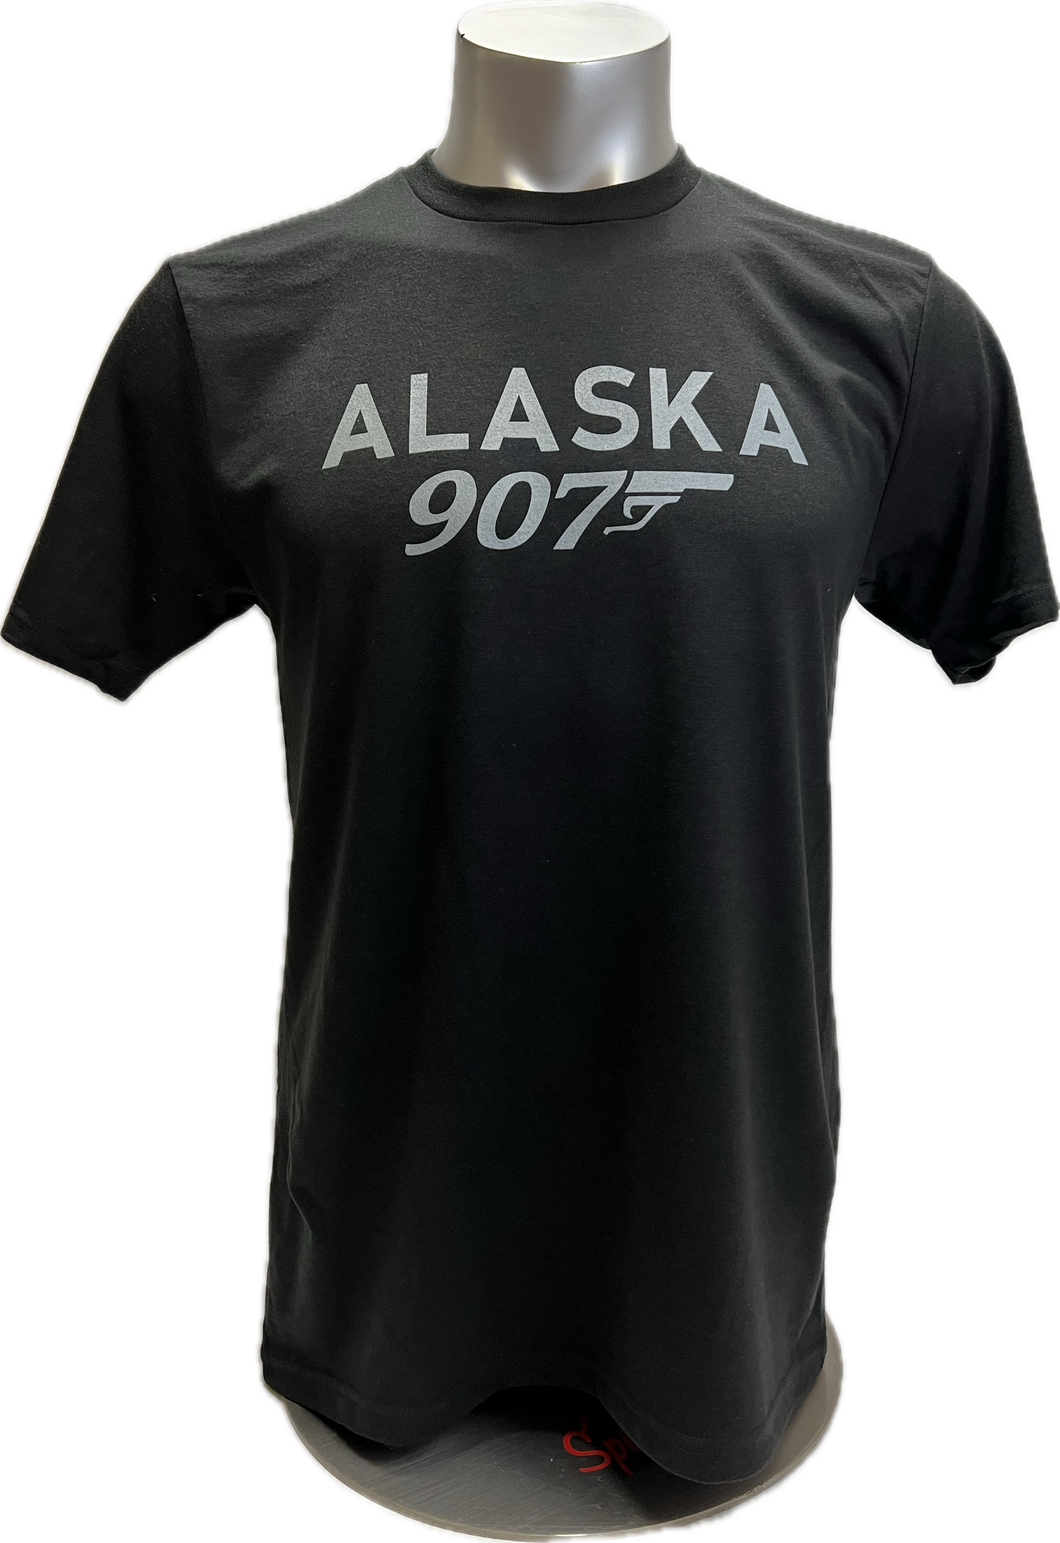 Alaska 907 - Tri-Blend T-Shirt